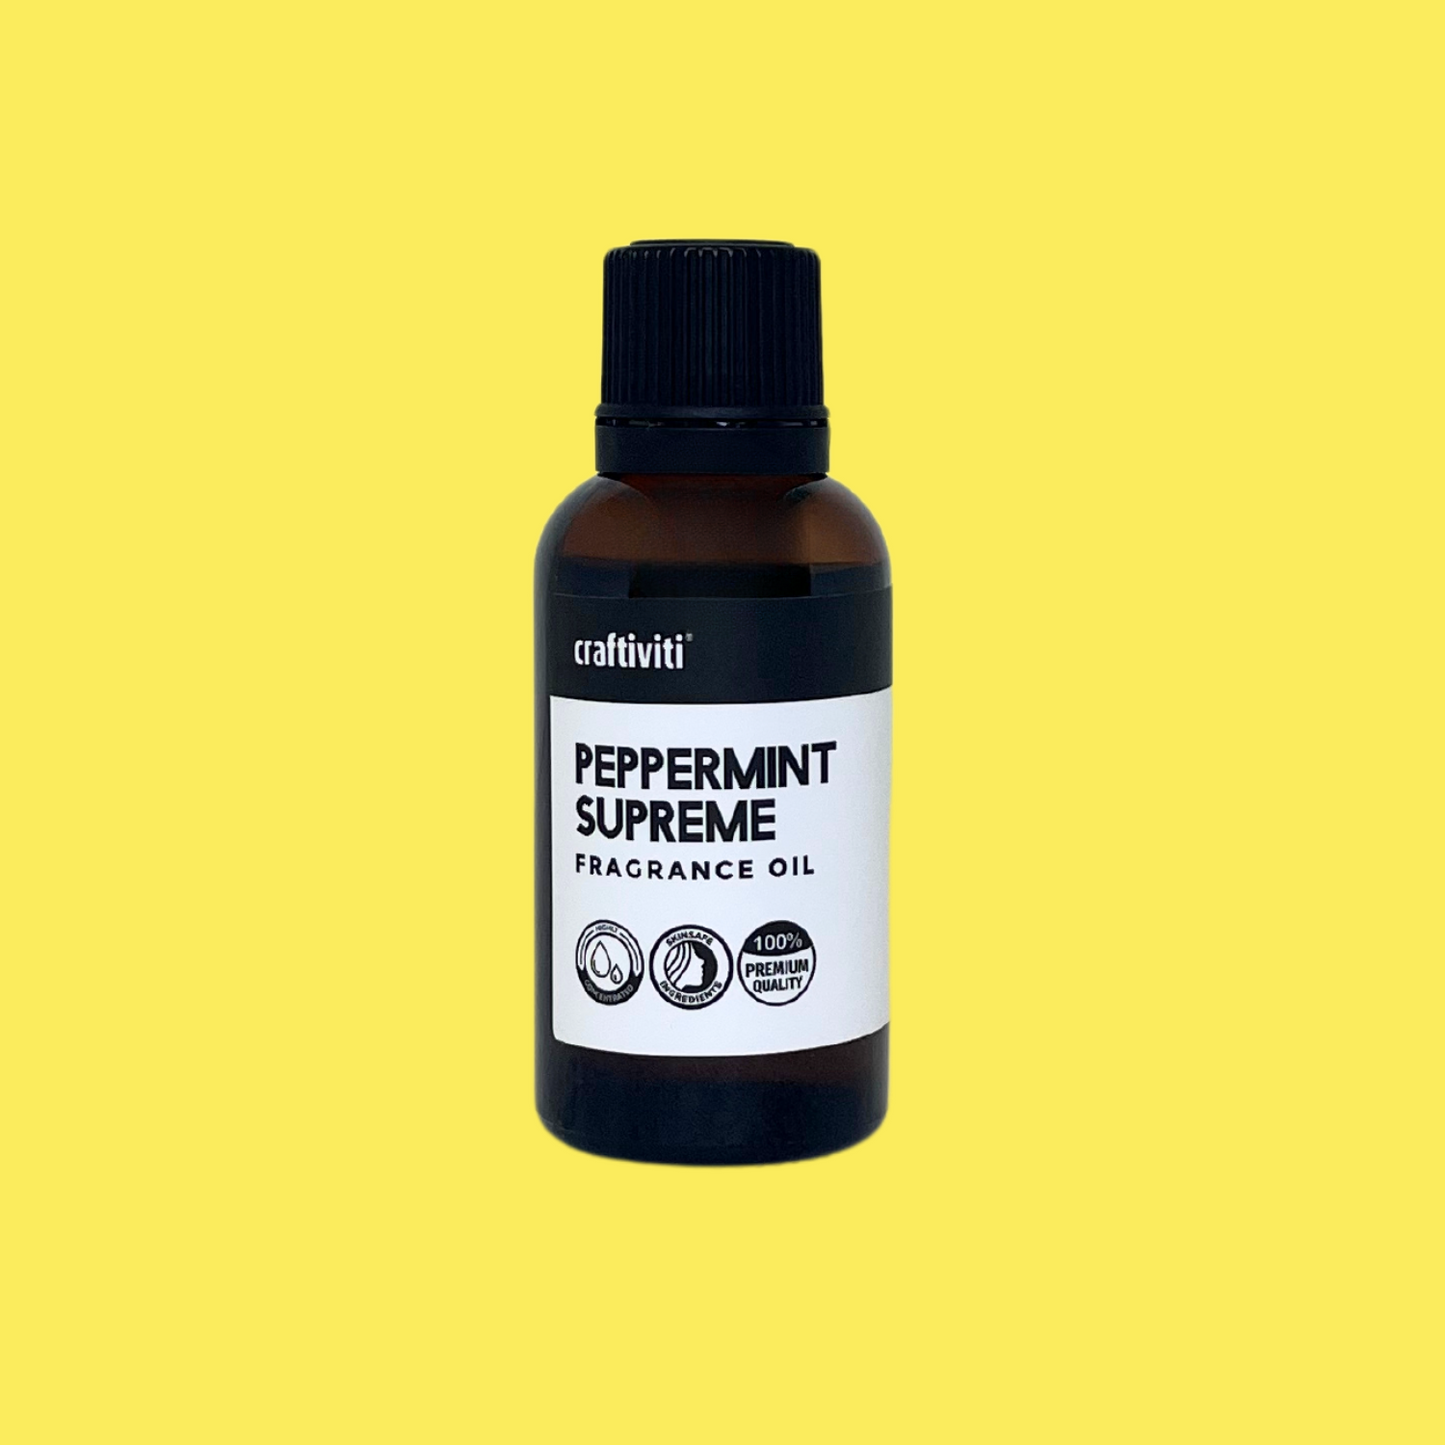 Peppermint Supreme Fragrance Oil